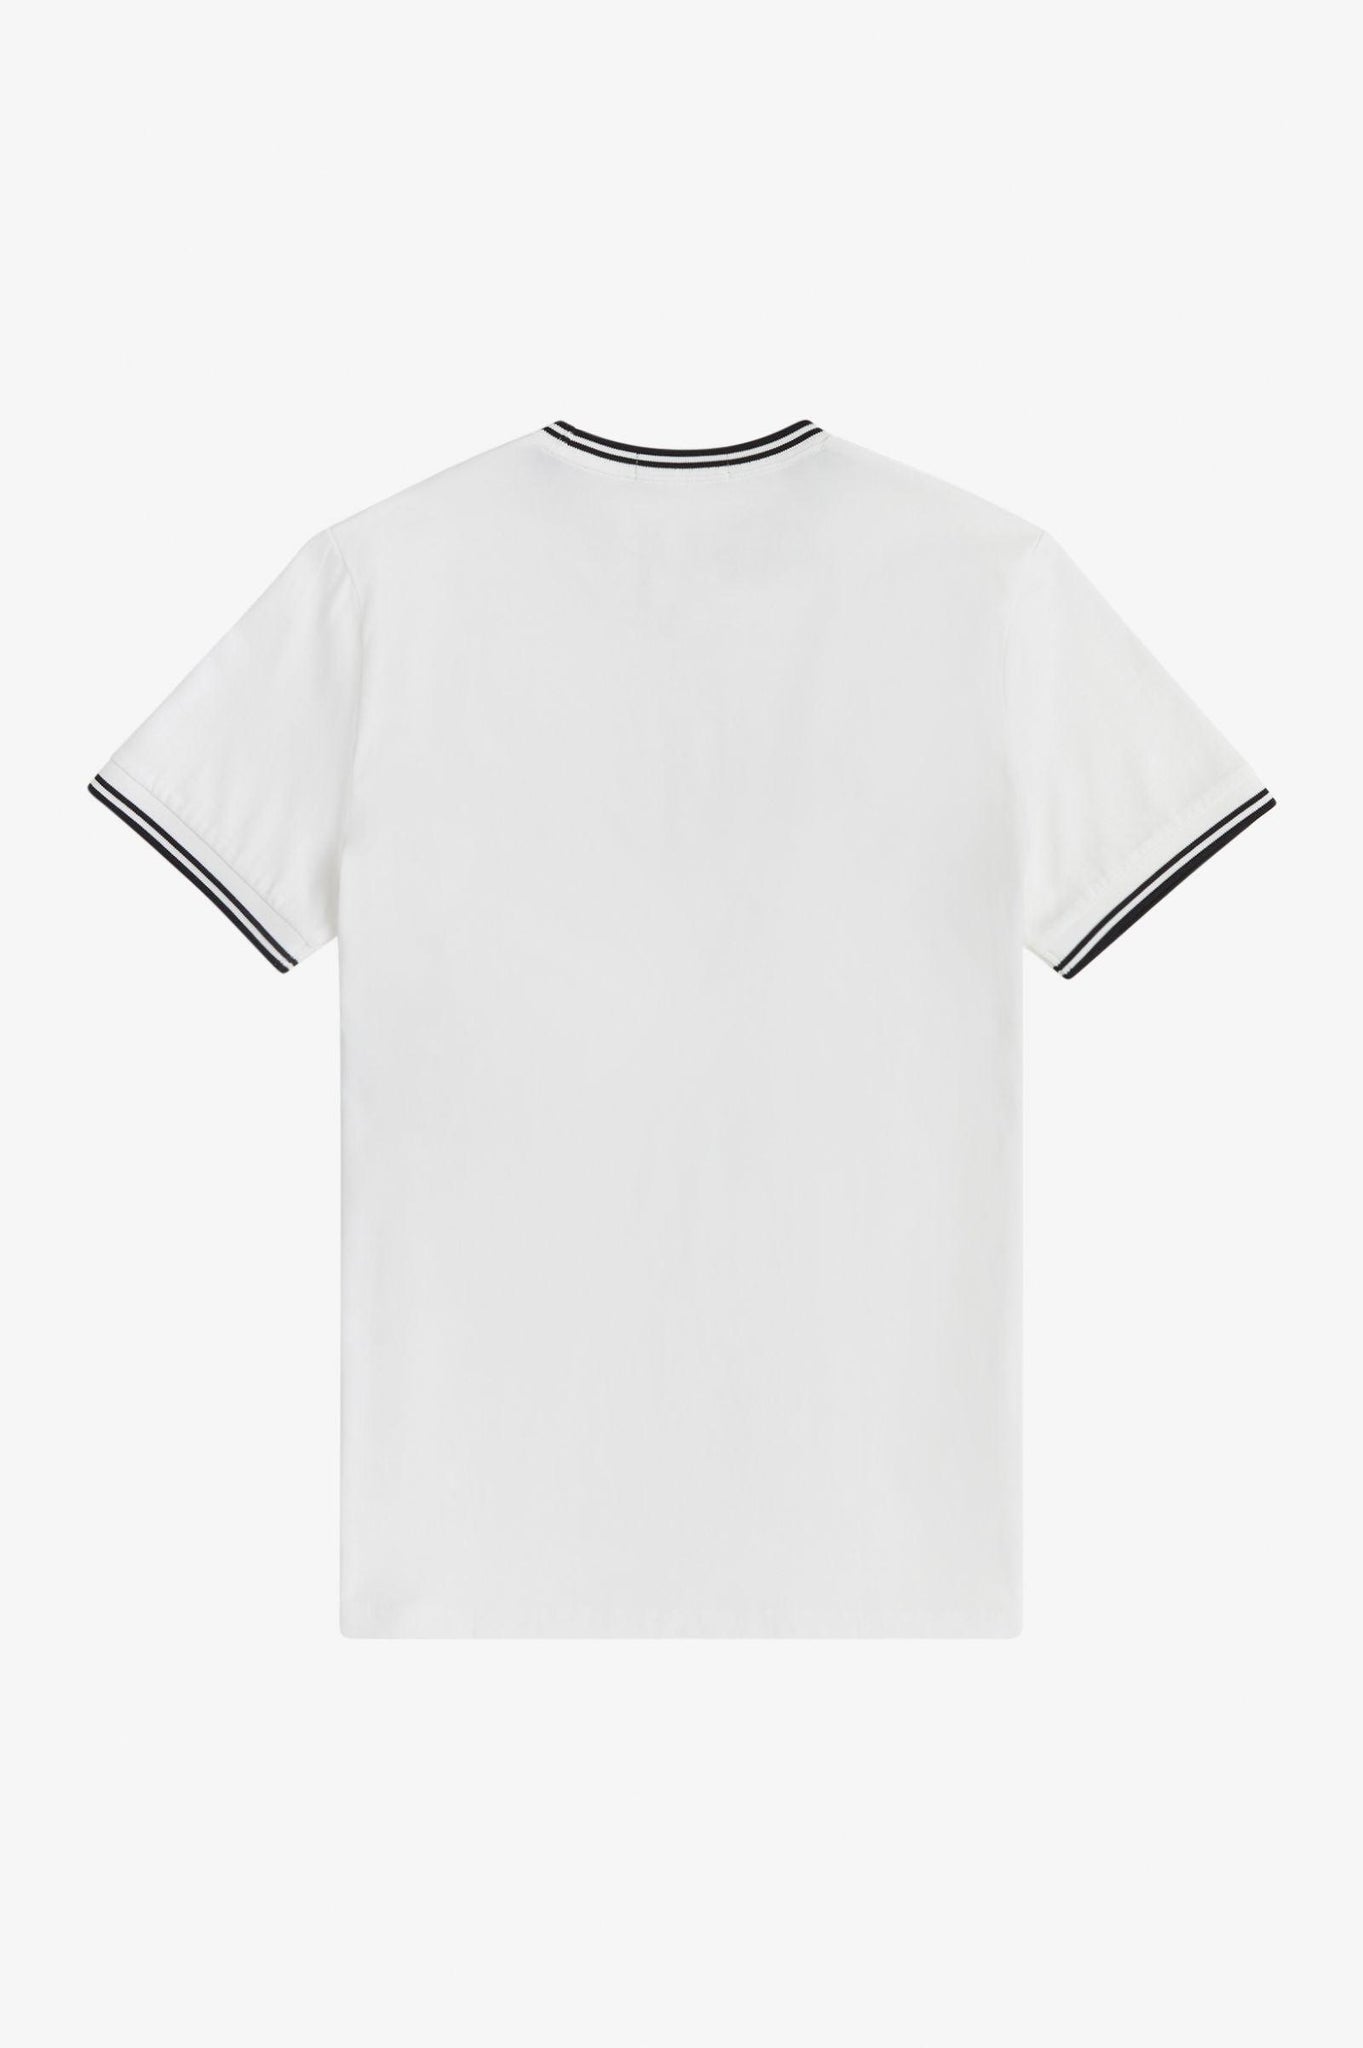 Camiseta Fred Perry con Ribete Twin Tipped Blanca - ECRU